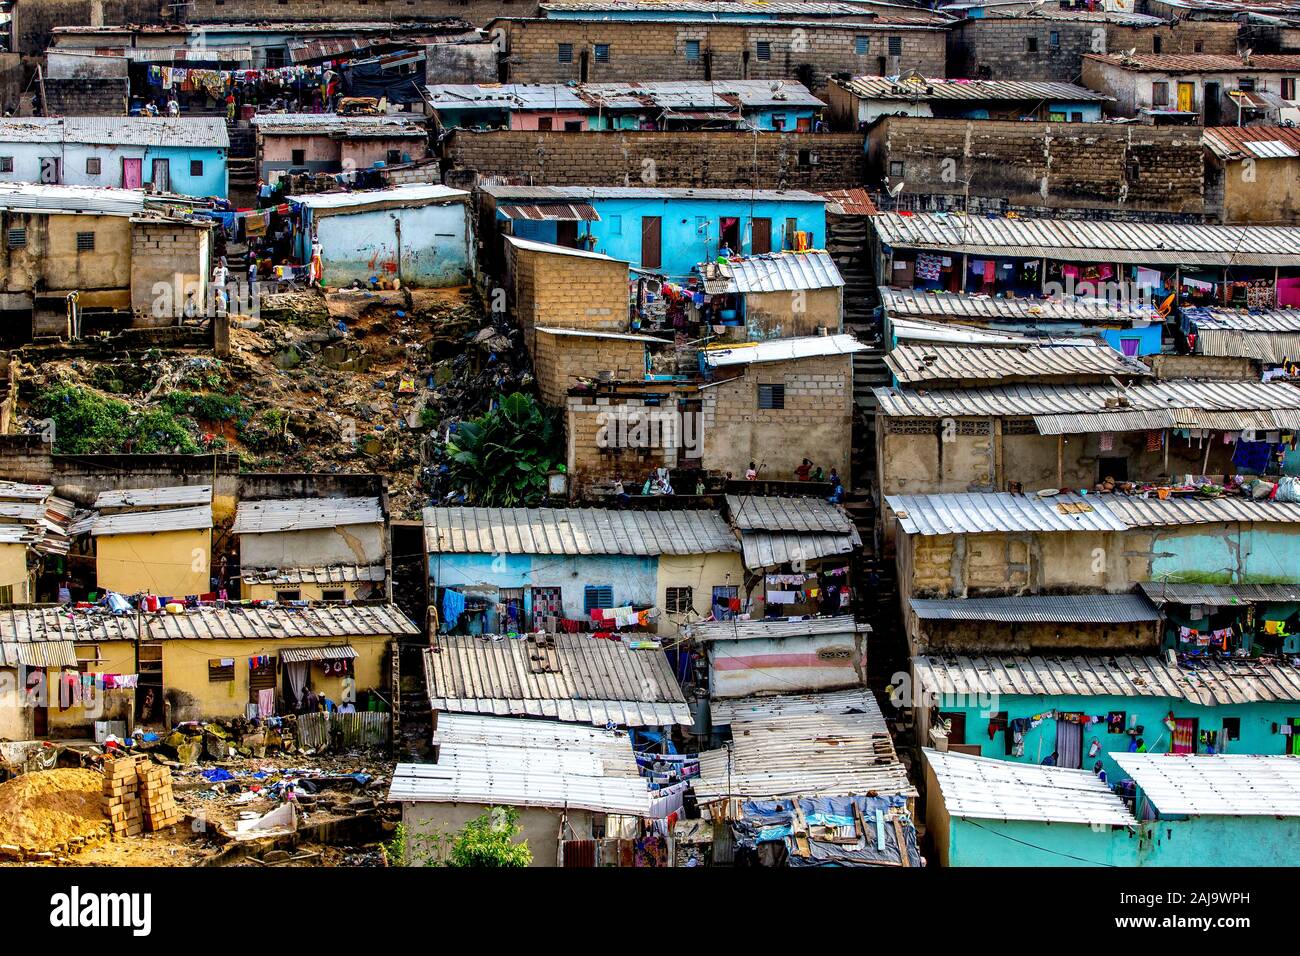 Slums in abidjan, ivory coast Stock Photo